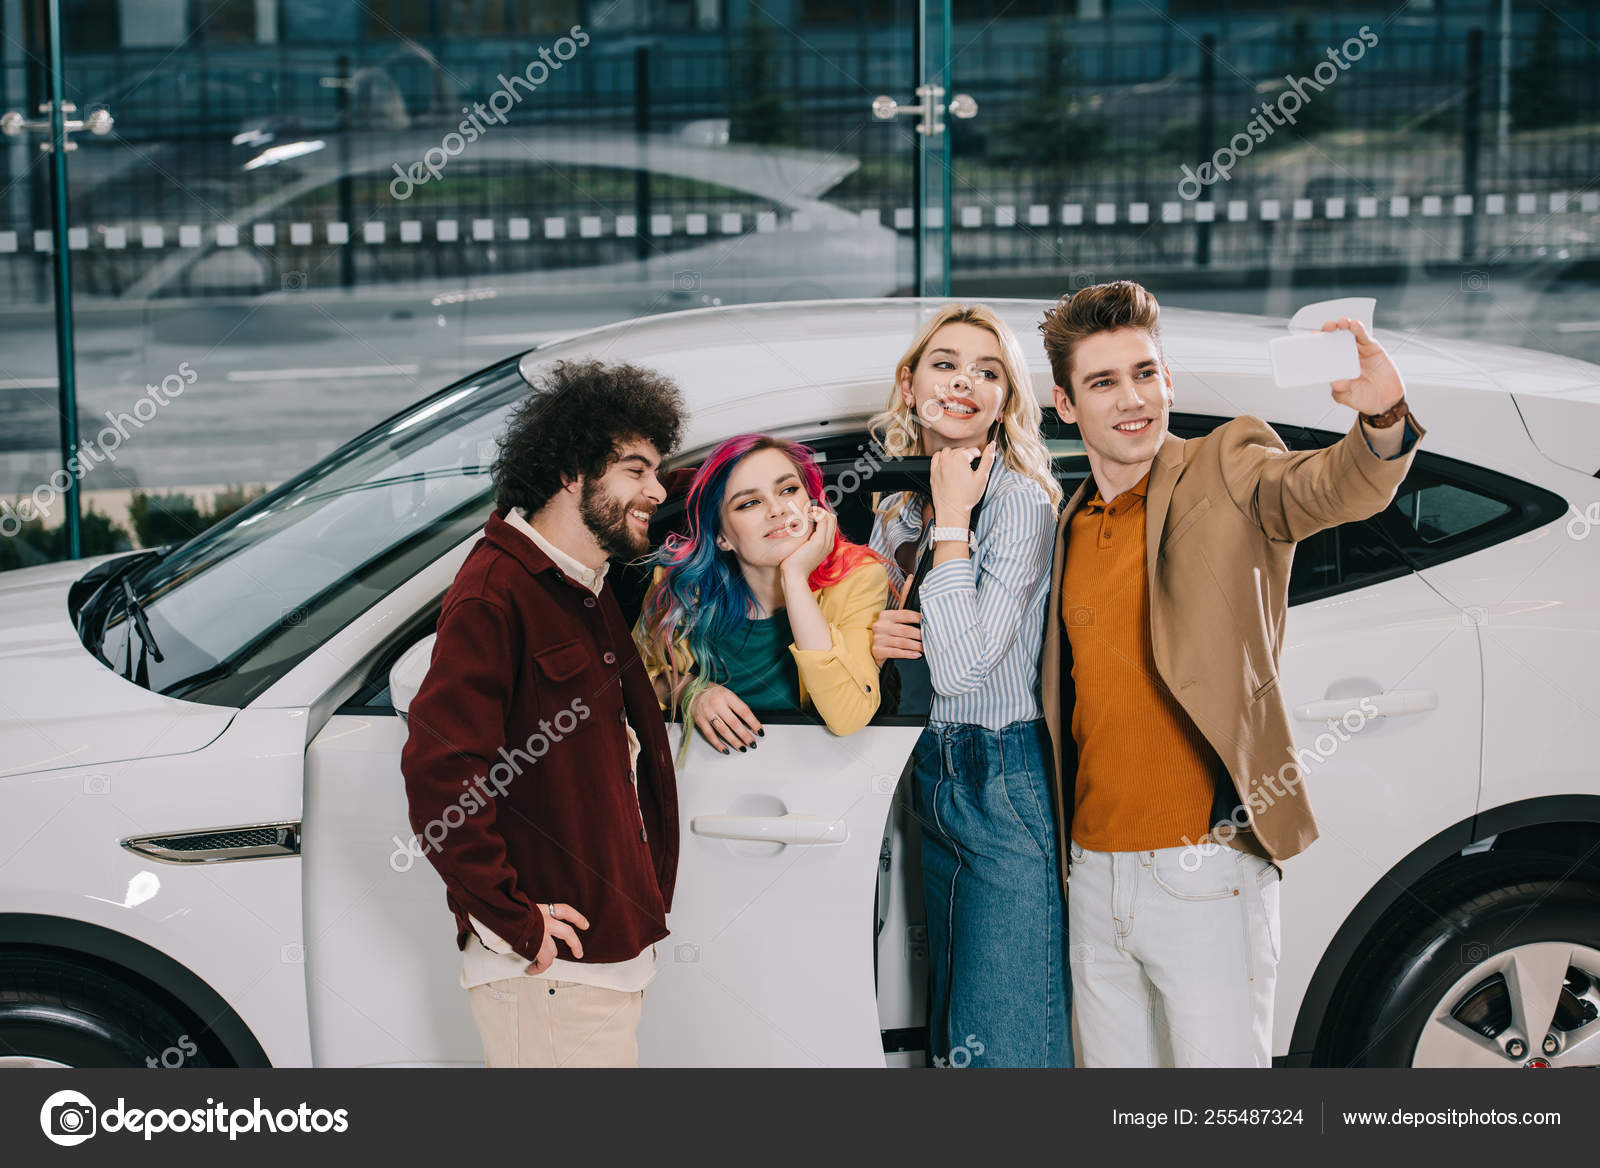 pretty car group selfie